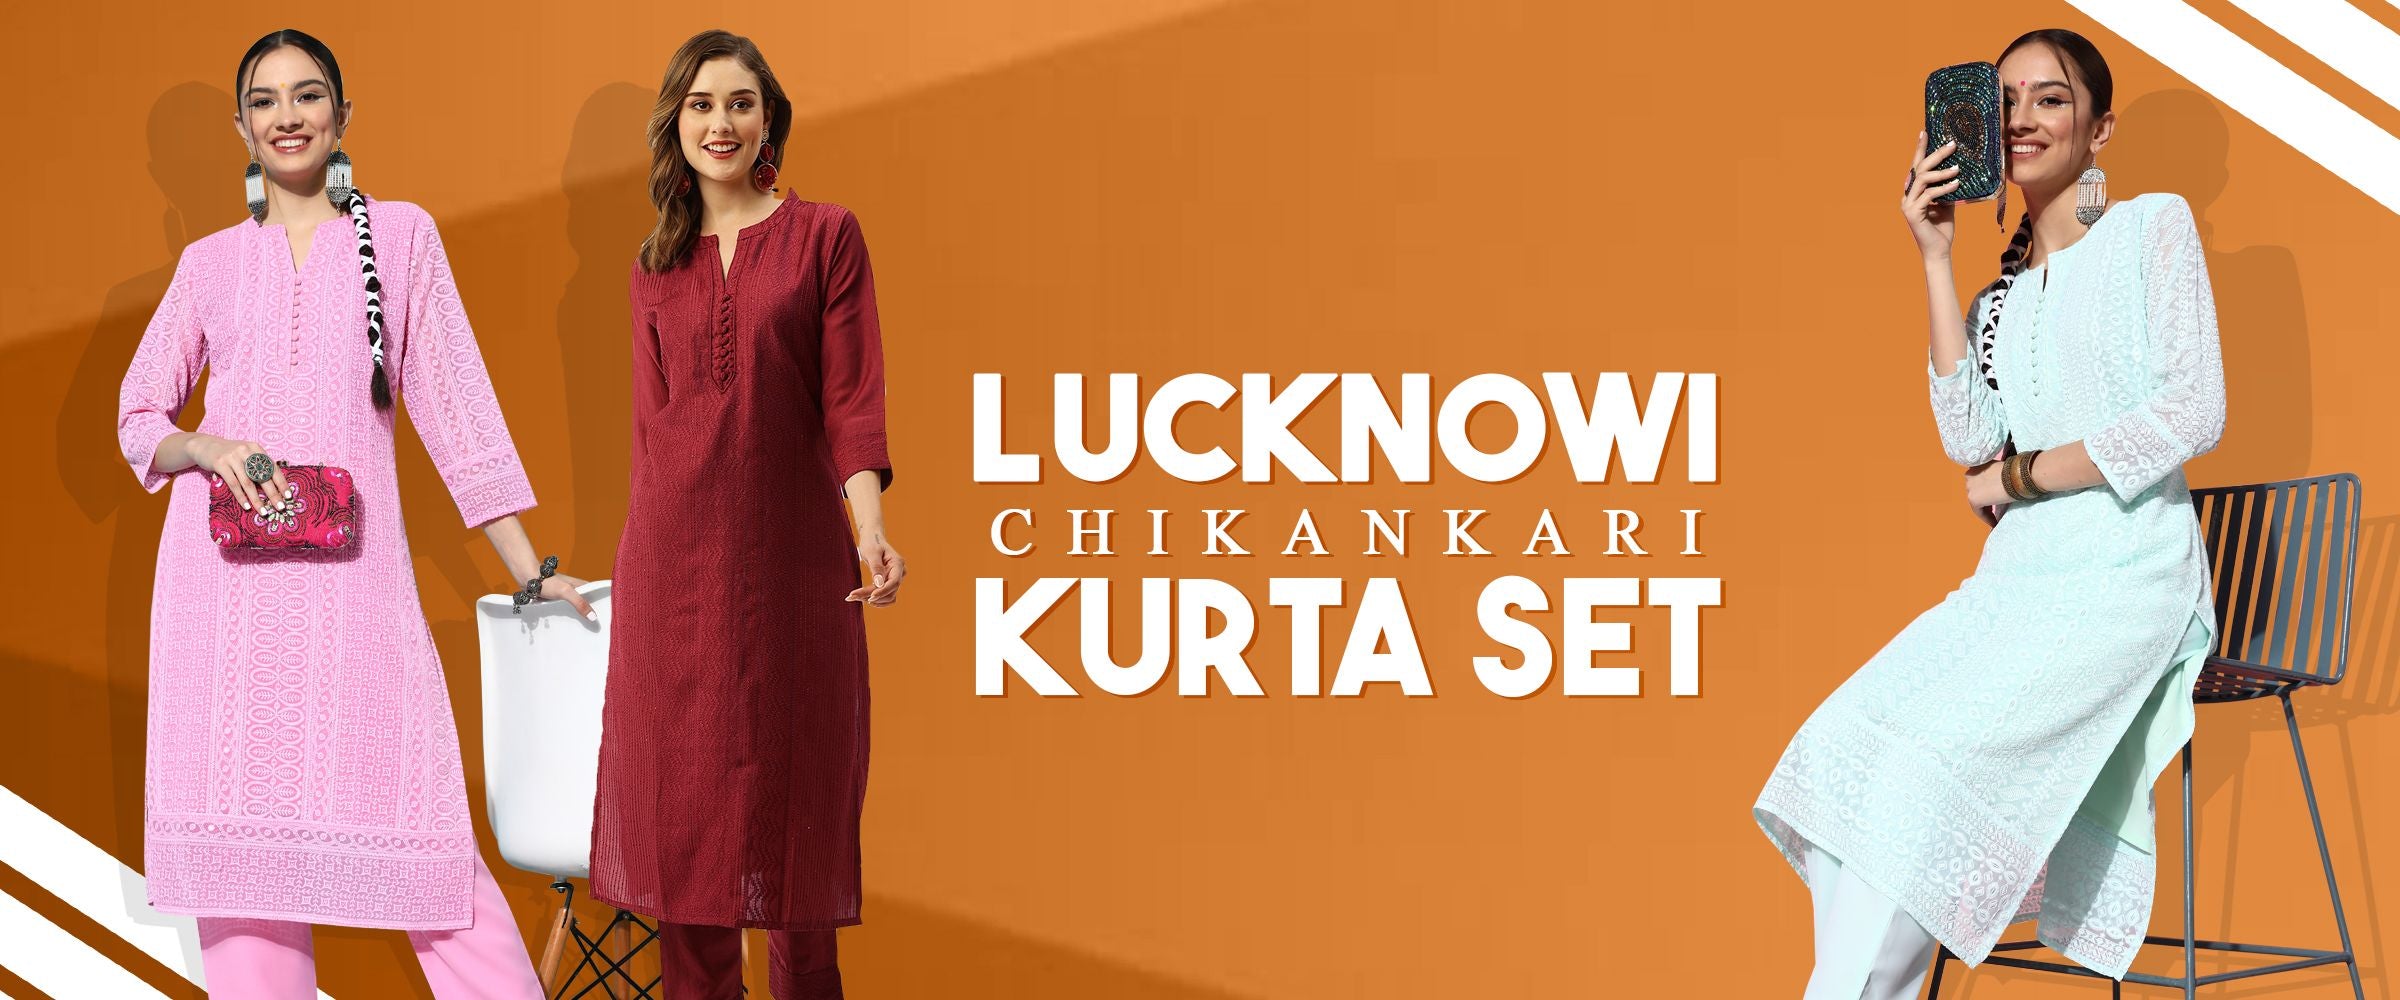 Chikankari Kurta Set: Embracing Tradition with Elegance